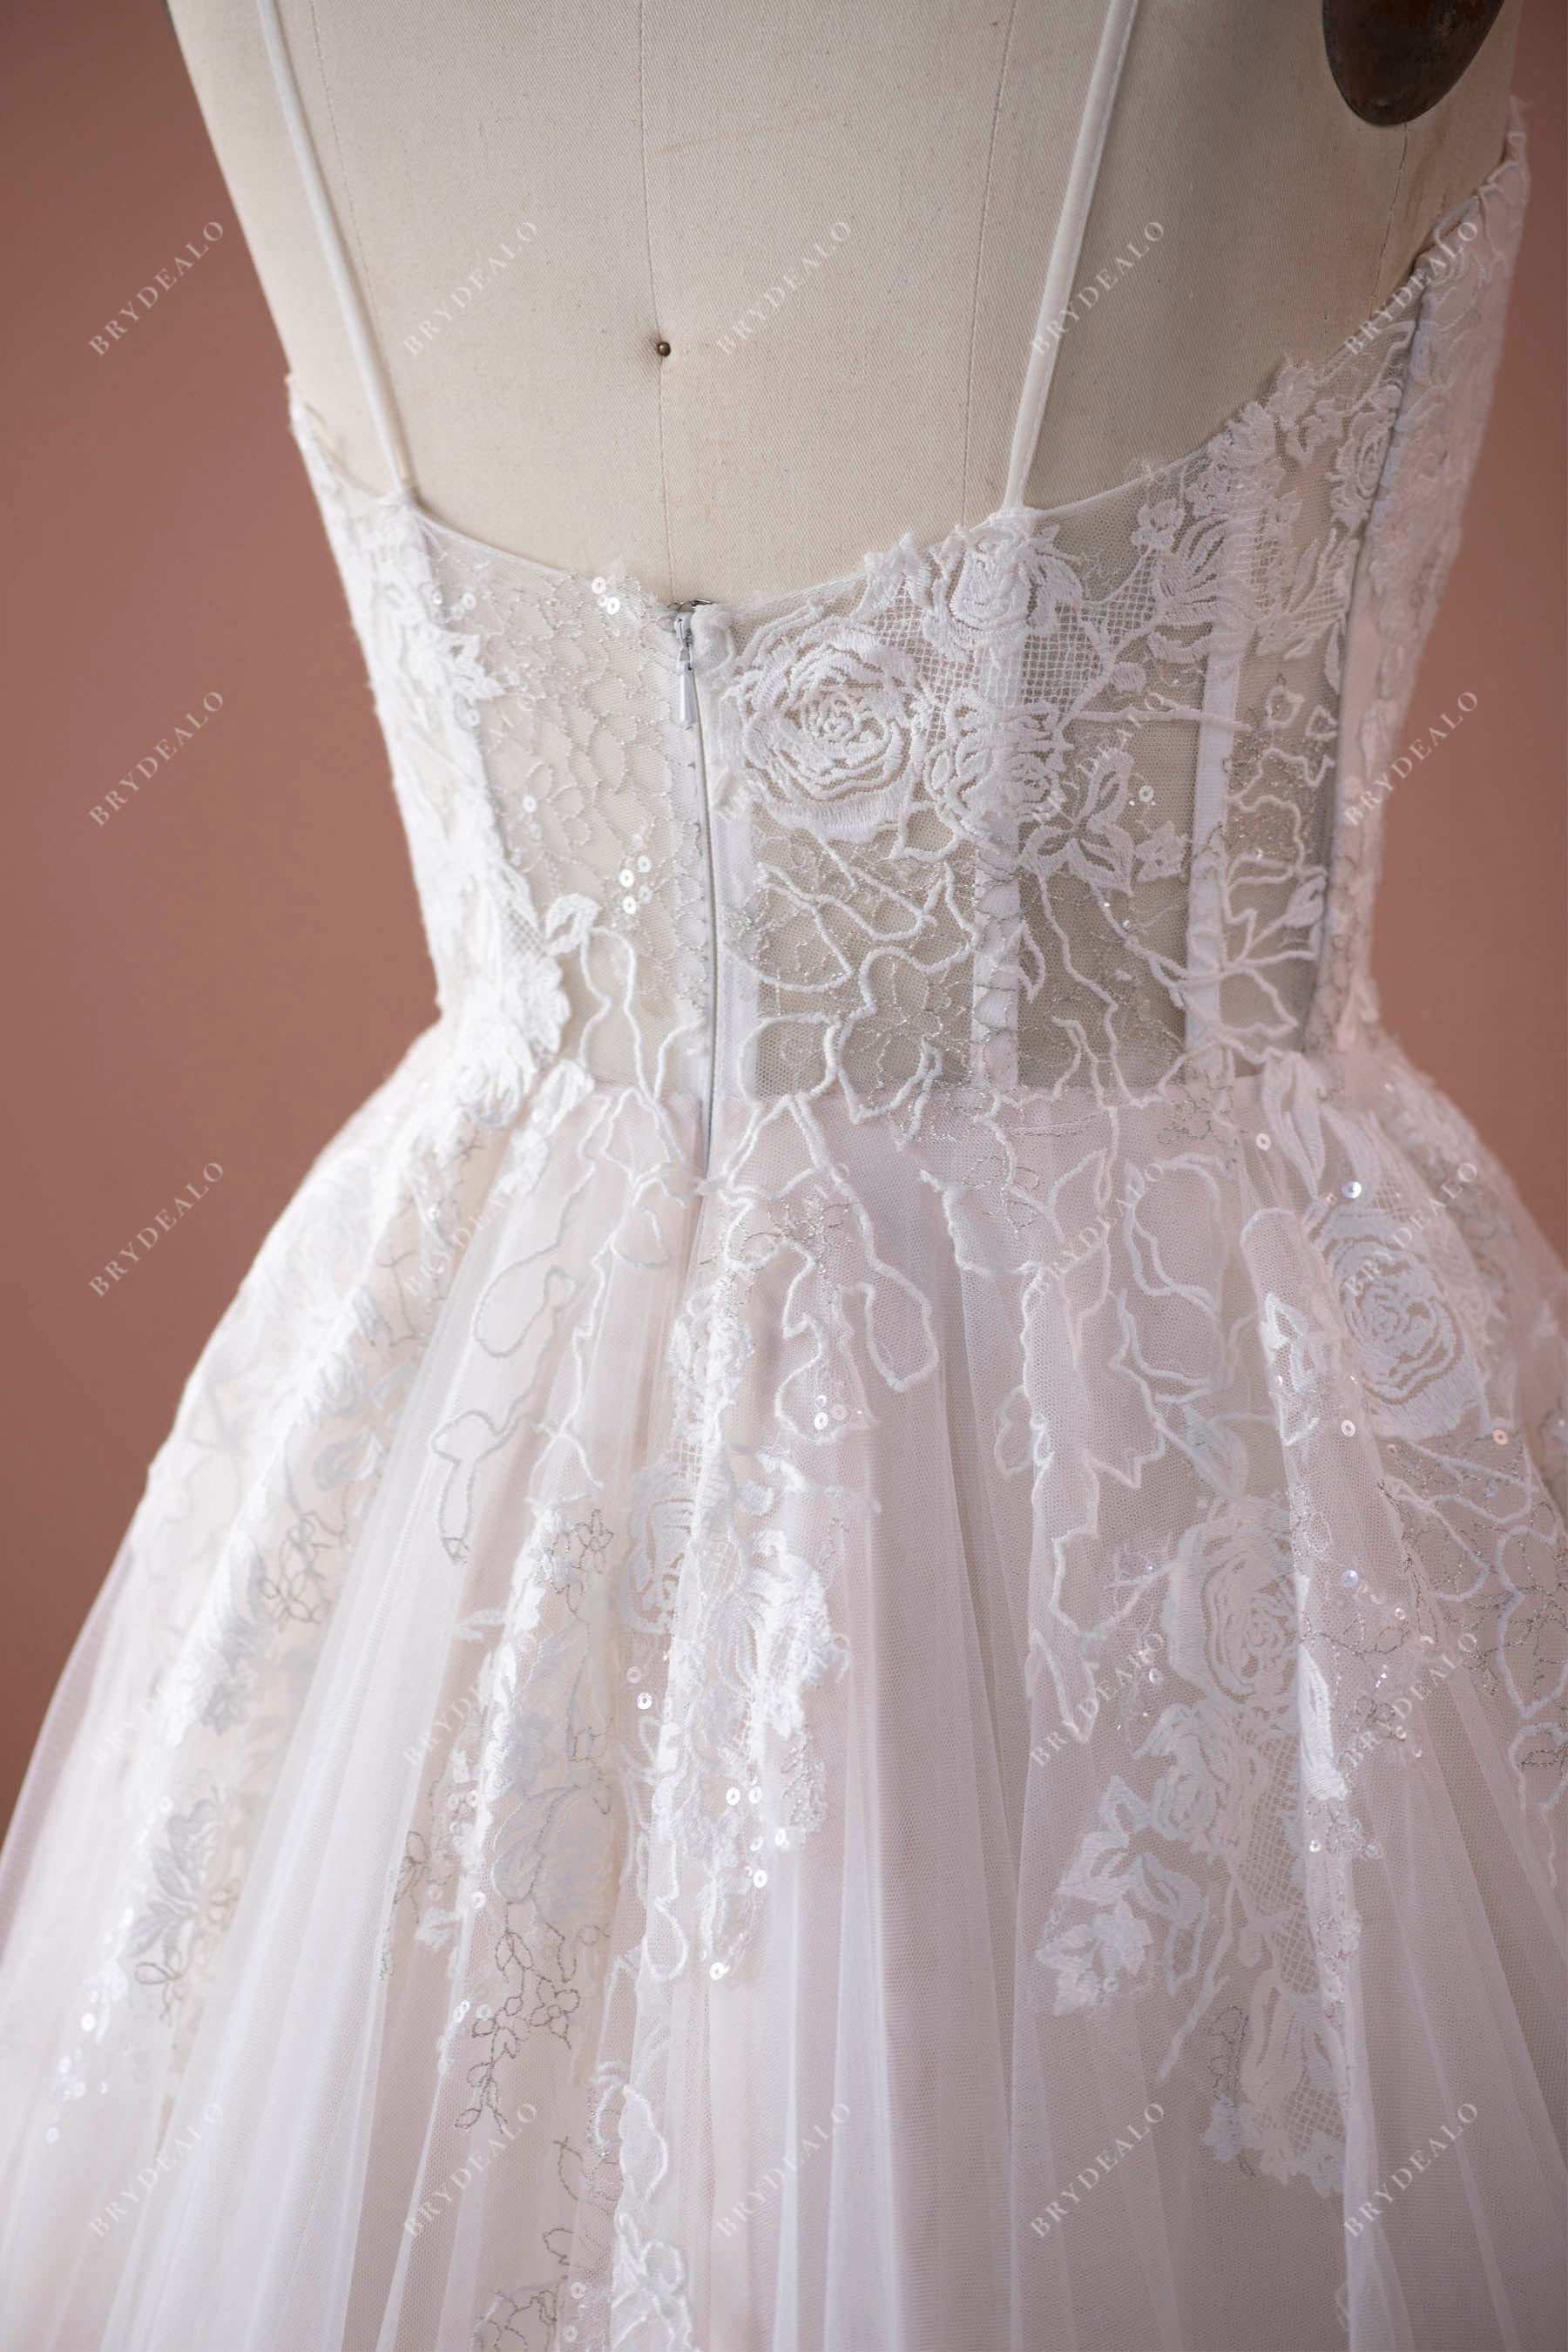 lace tulle ruffled wedding dress